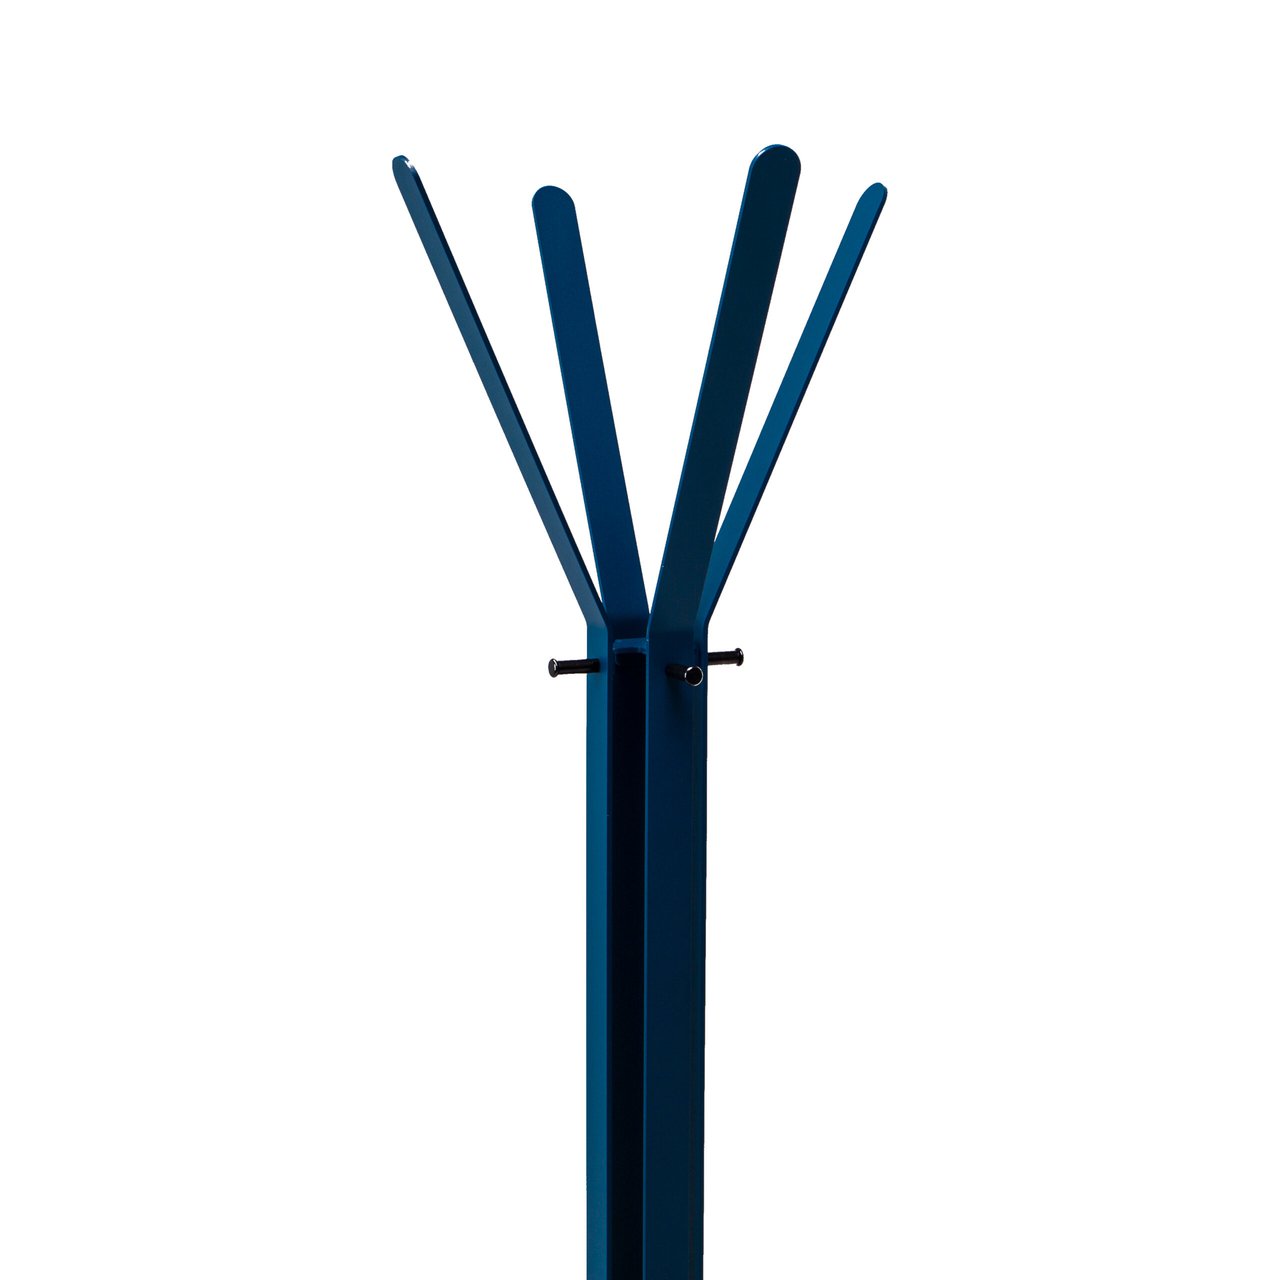 Gorillz Stack - Coat rack Standing- Industrial design - 12 hooks- Blue